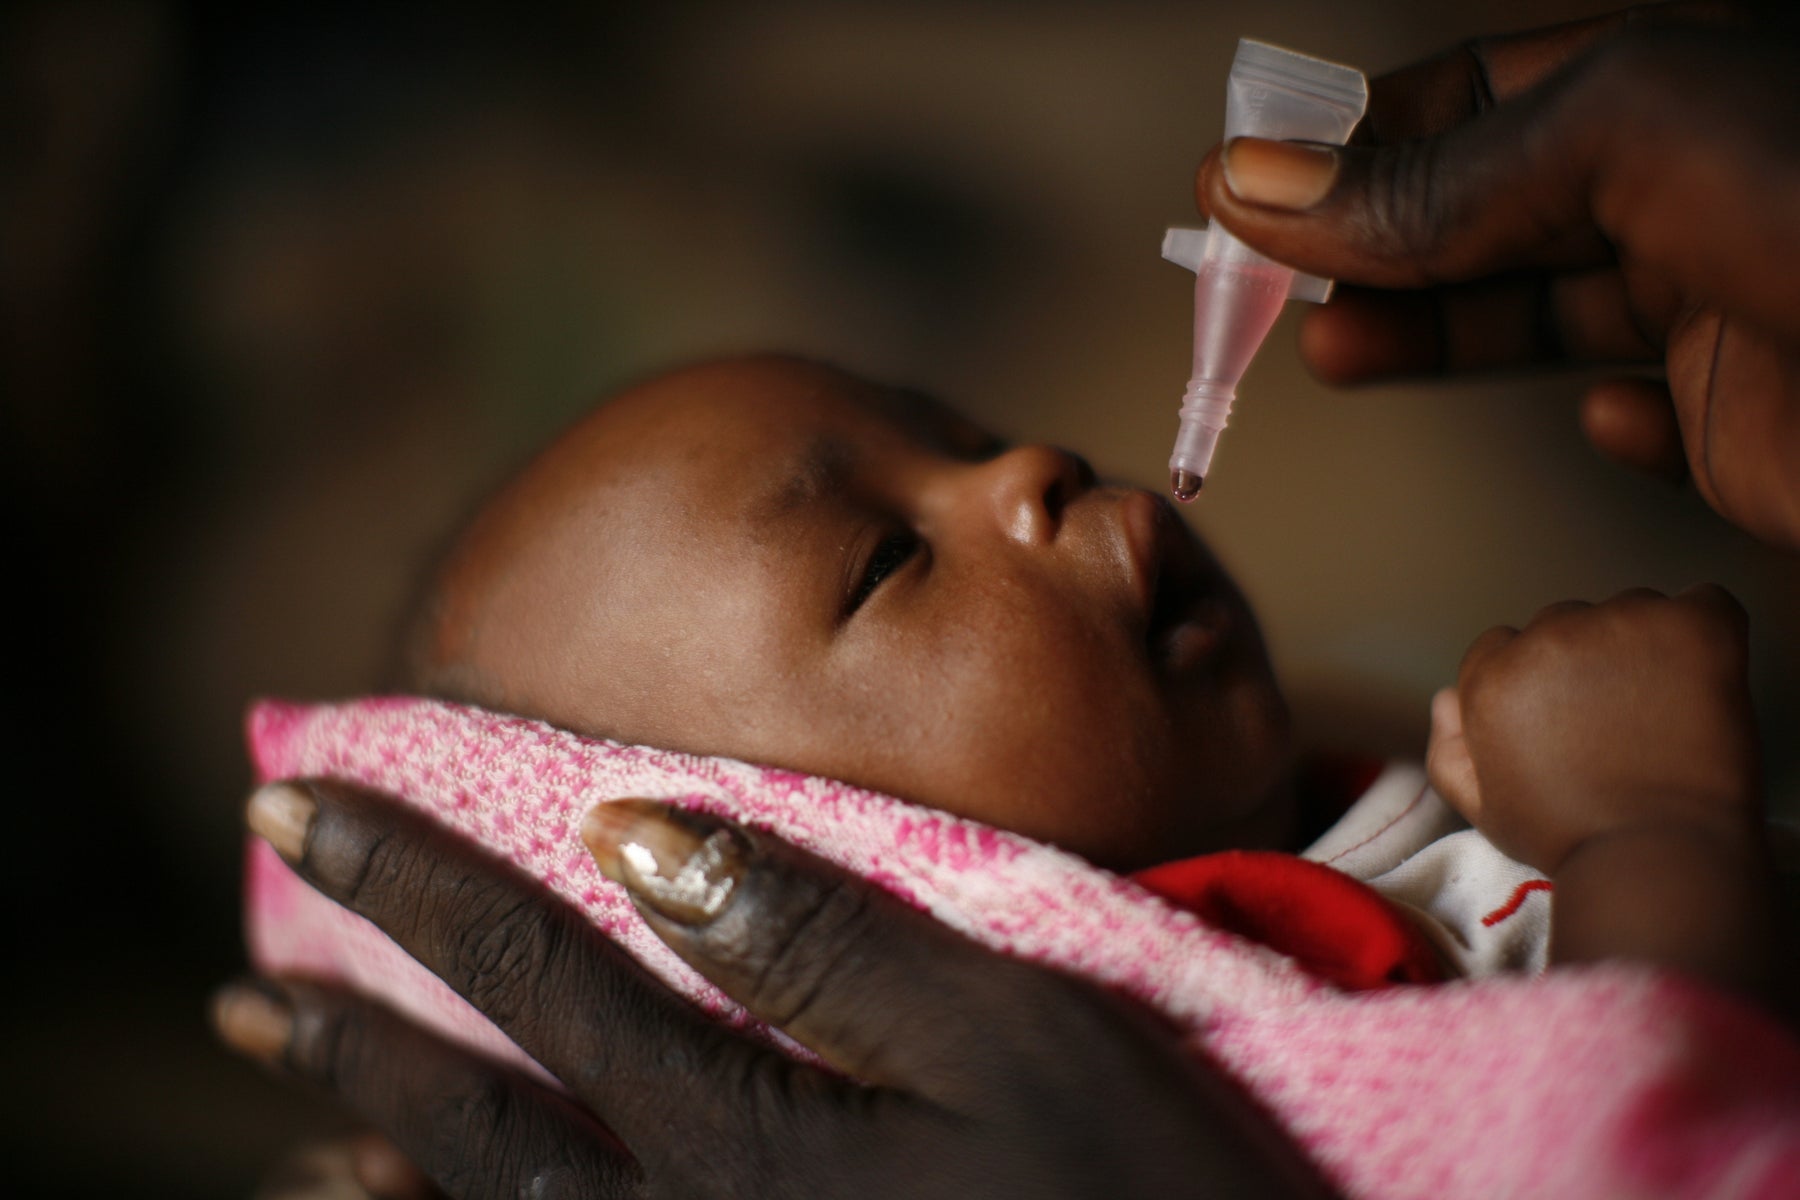 Child receiving oral vaccine